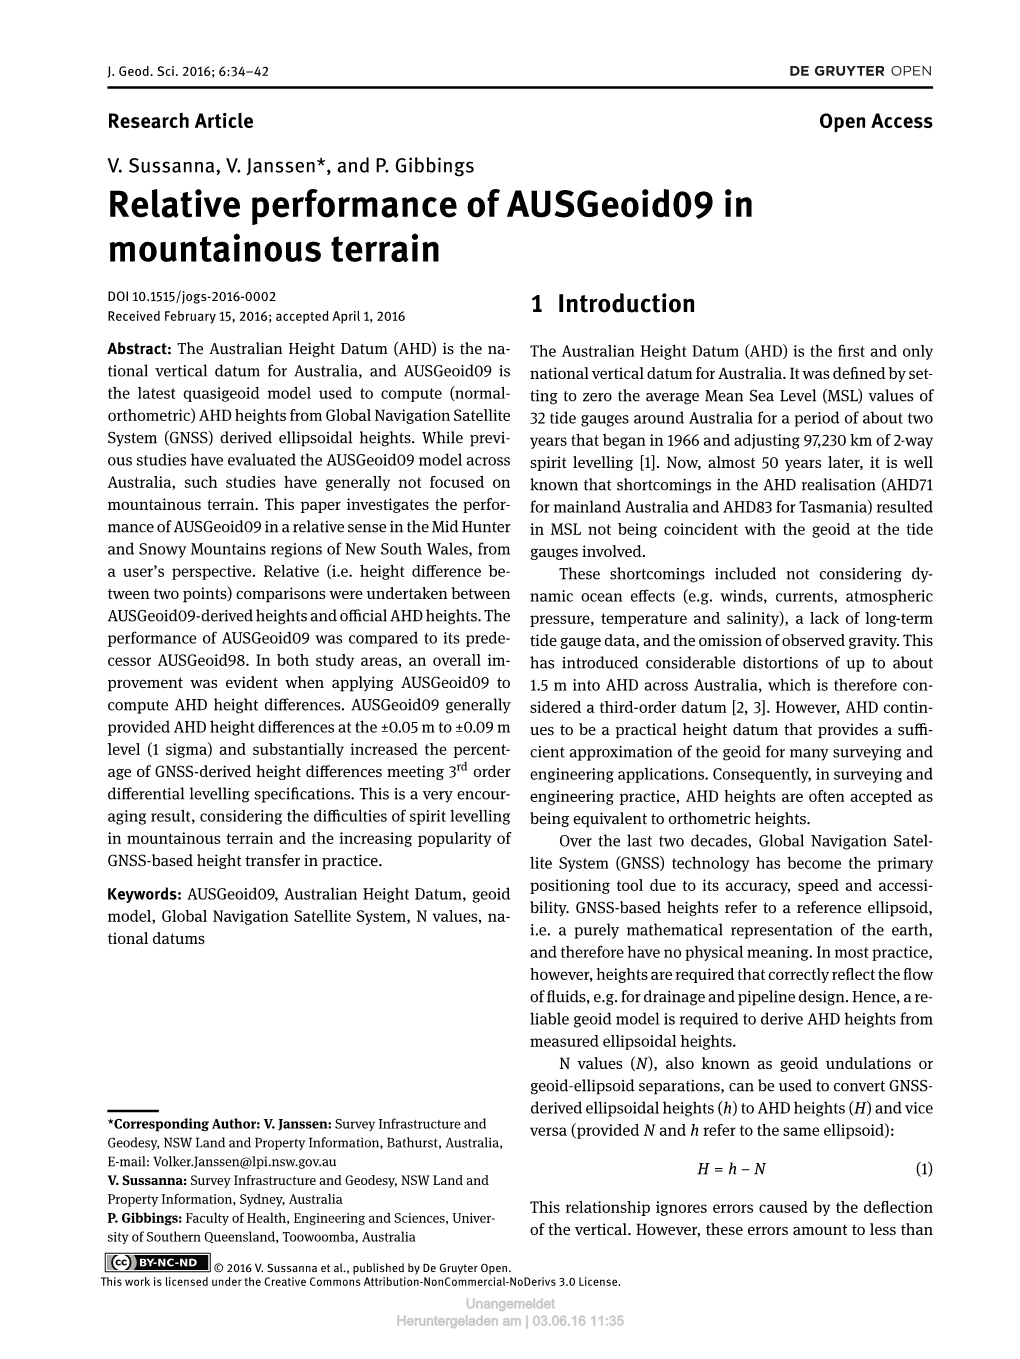 Relative Performance of Ausgeoid09 in Mountainous Terrain